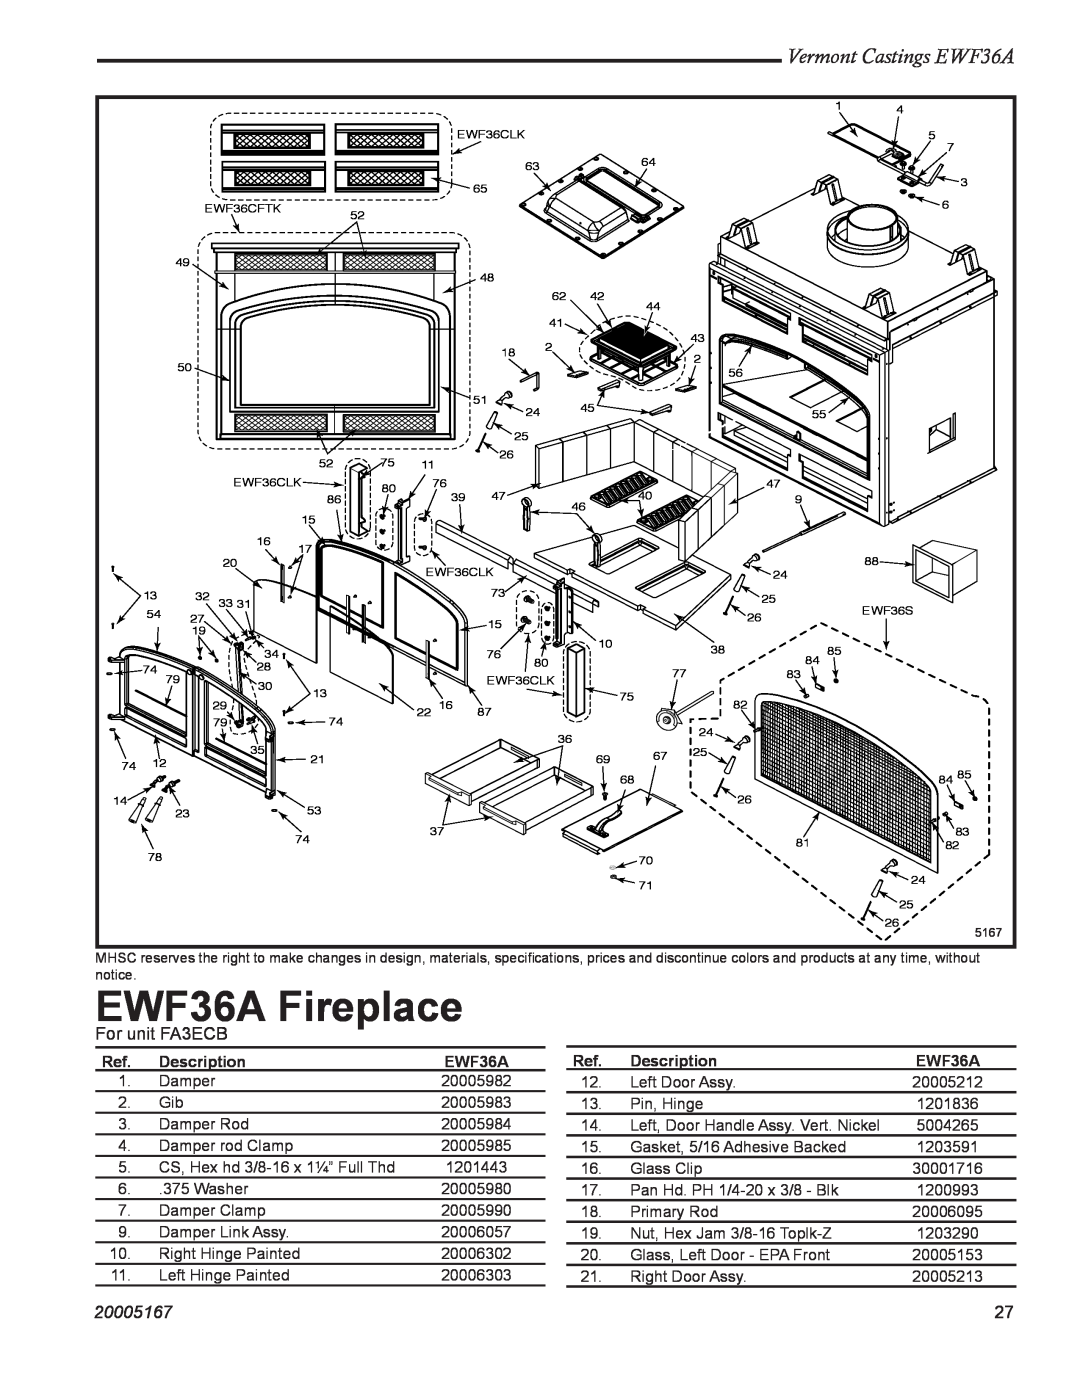 MHP manual EWF36A Fireplace, Vermont Castings EWF36A, 20005167, Description 